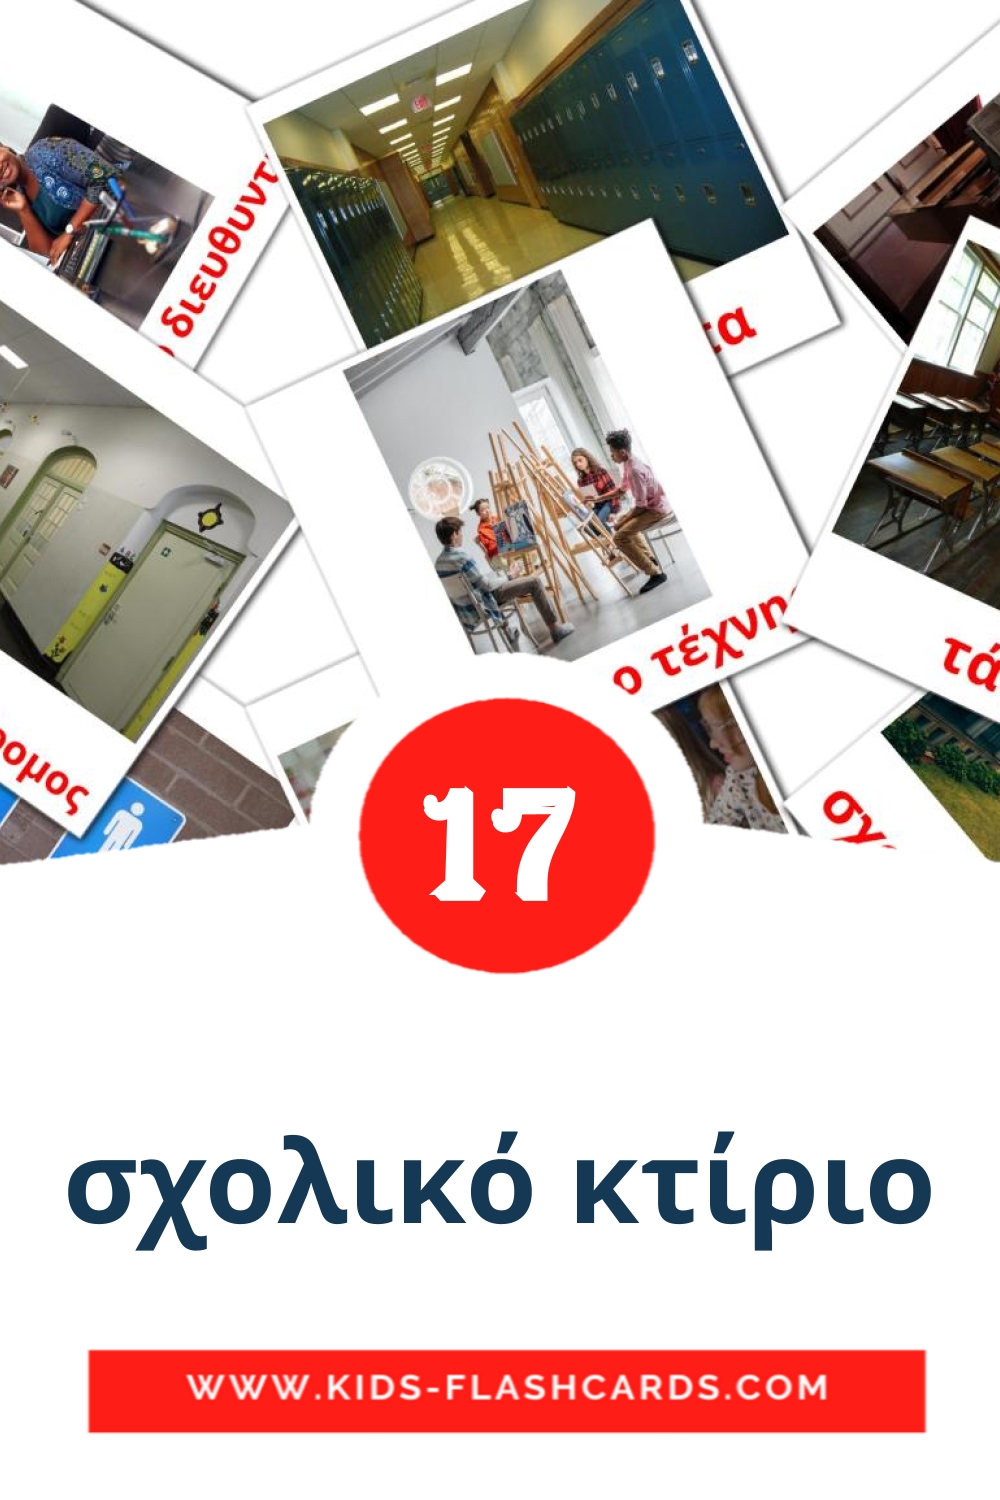 17 σχολικό κτίριο fotokaarten voor kleuters in het grieks